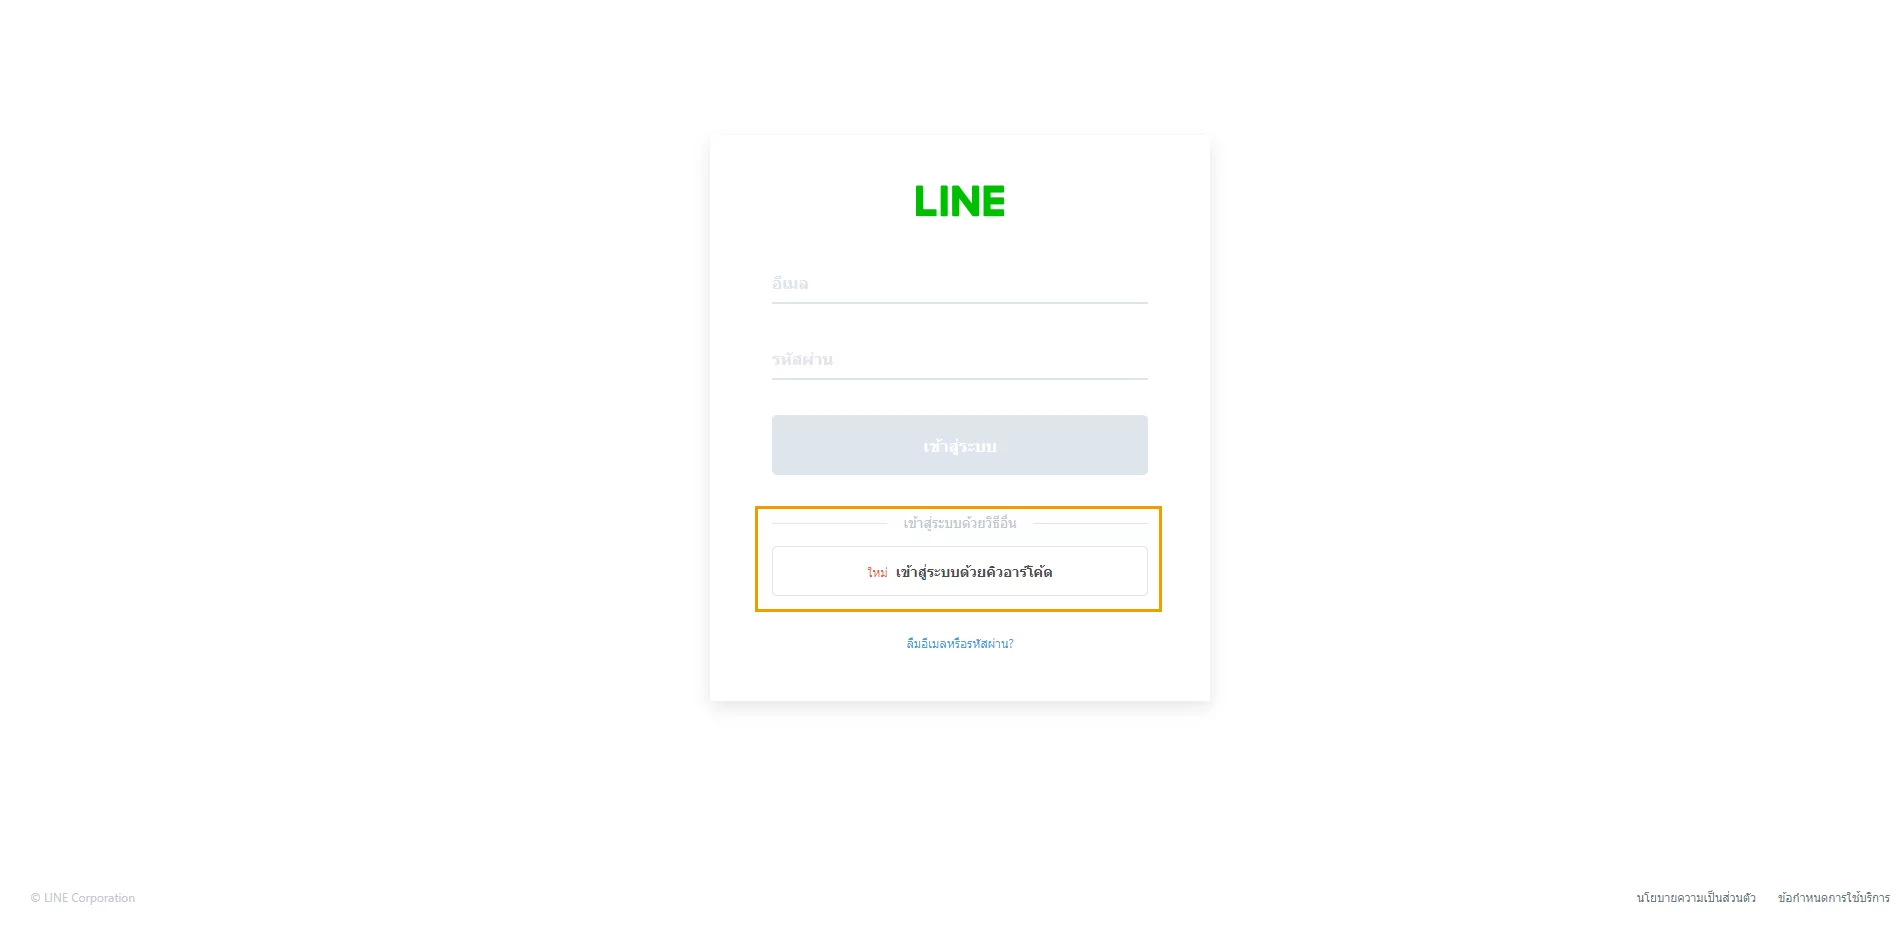 First register LINE